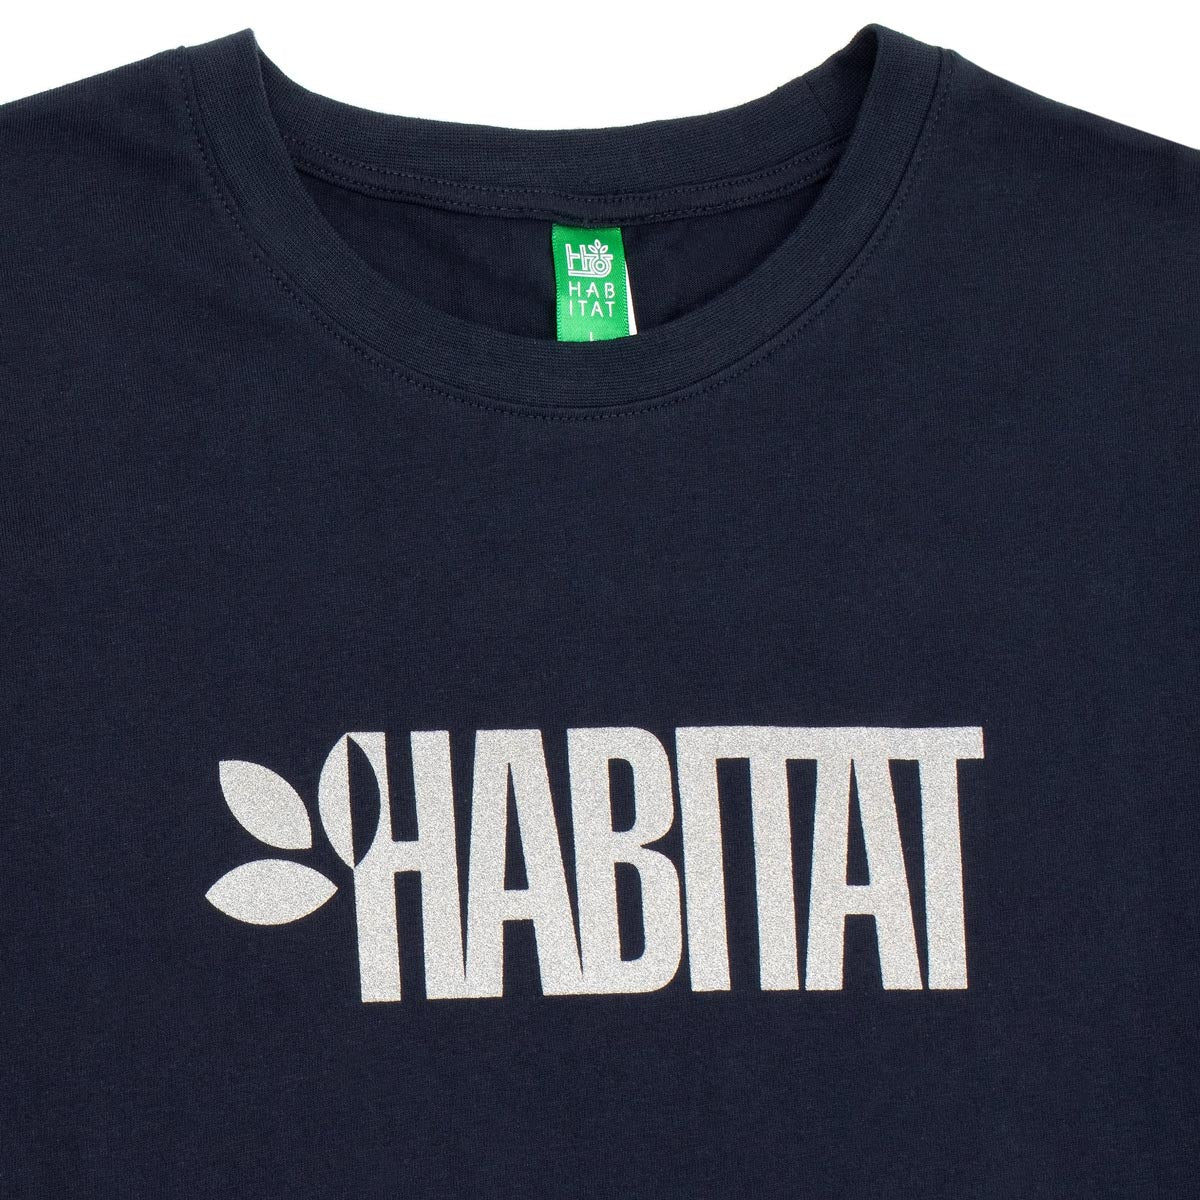 Habitat Apex T-Shirt - Navy image 2